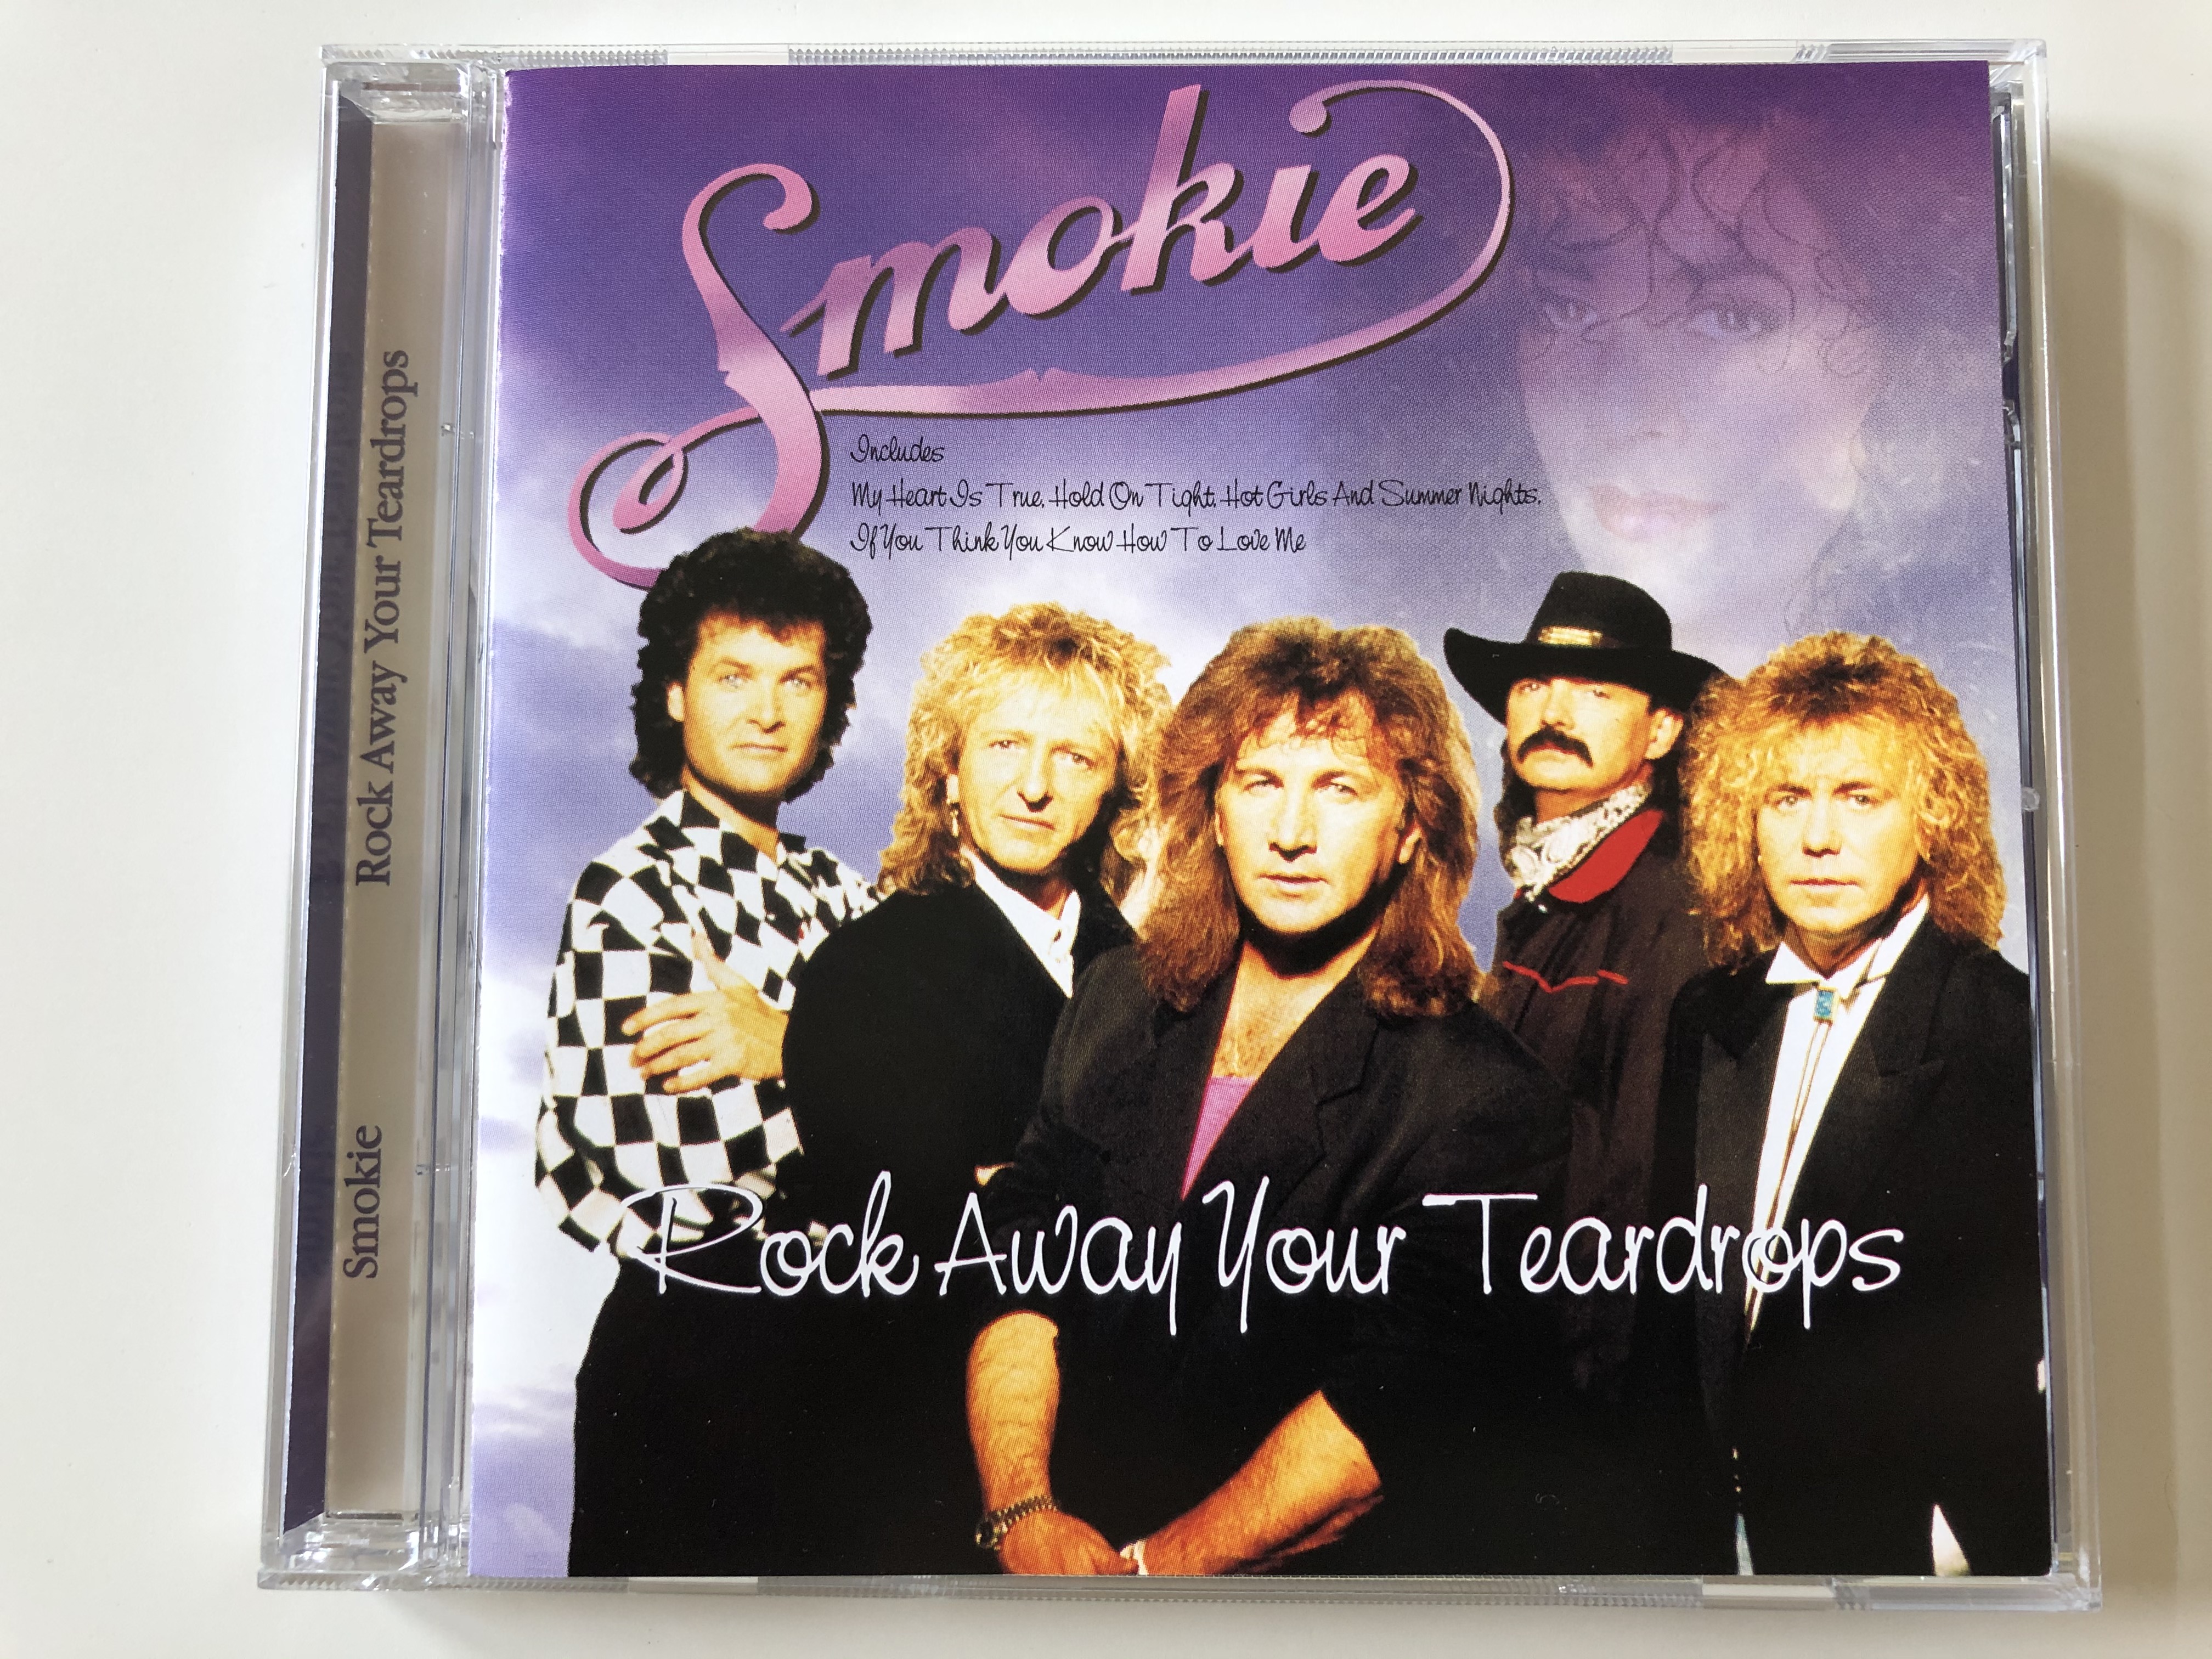 smokie-rock-away-your-teardrops-cmc-home-entertainment-audio-cd-1996-10054-2-1-.jpg